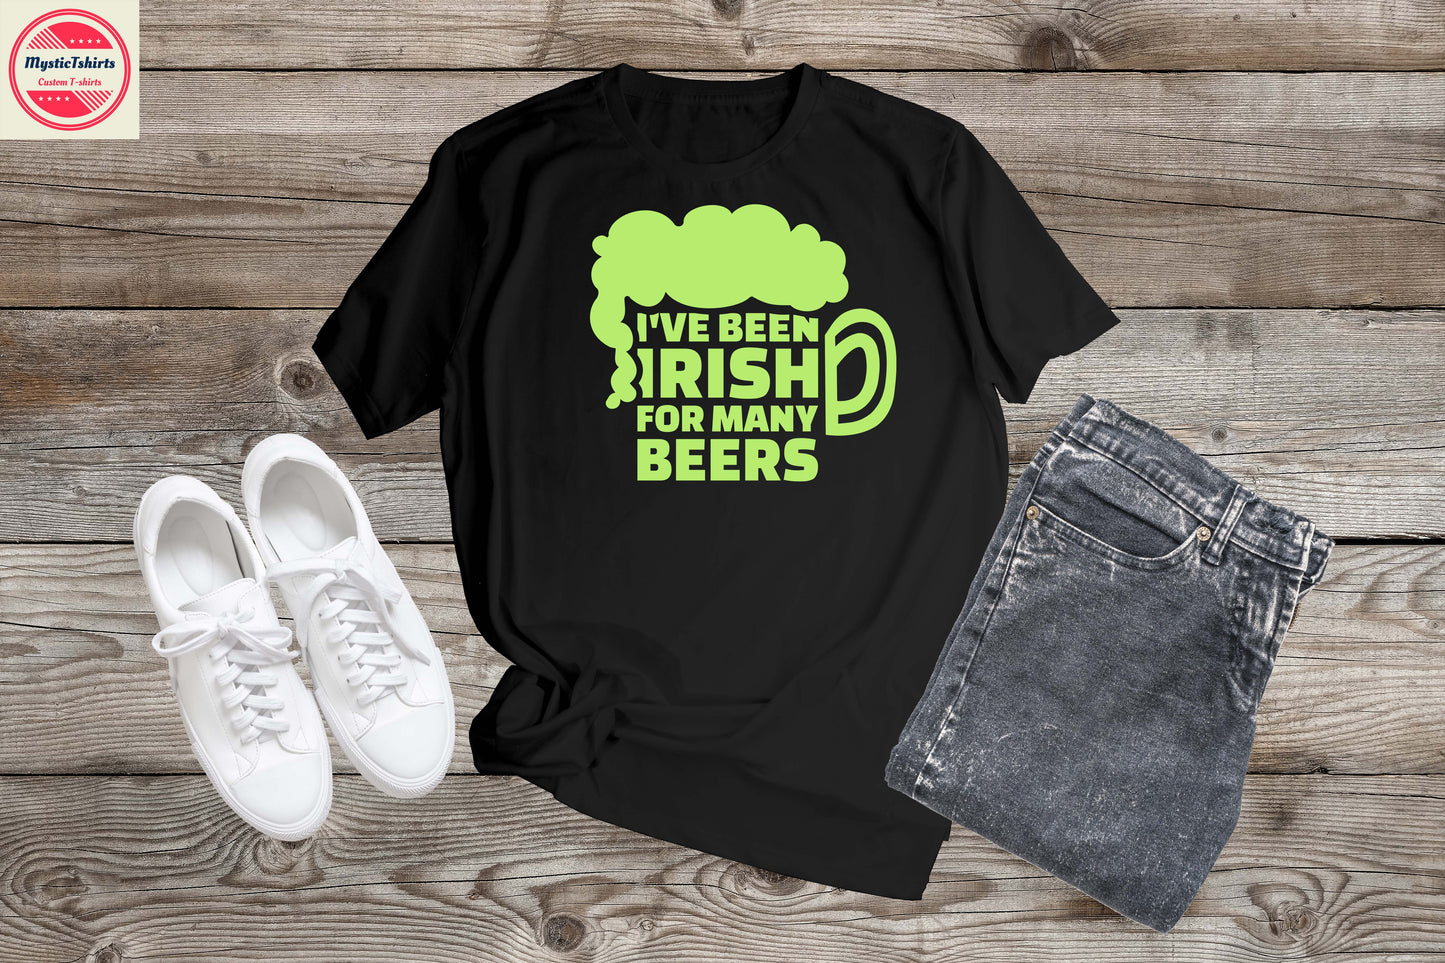 235. I'VE BEEN IRISH FOR MANY BEERS, Custom Made Shirt, Personalized T-Shirt, Custom Text, Make Your Own Shirt, Custom Tee